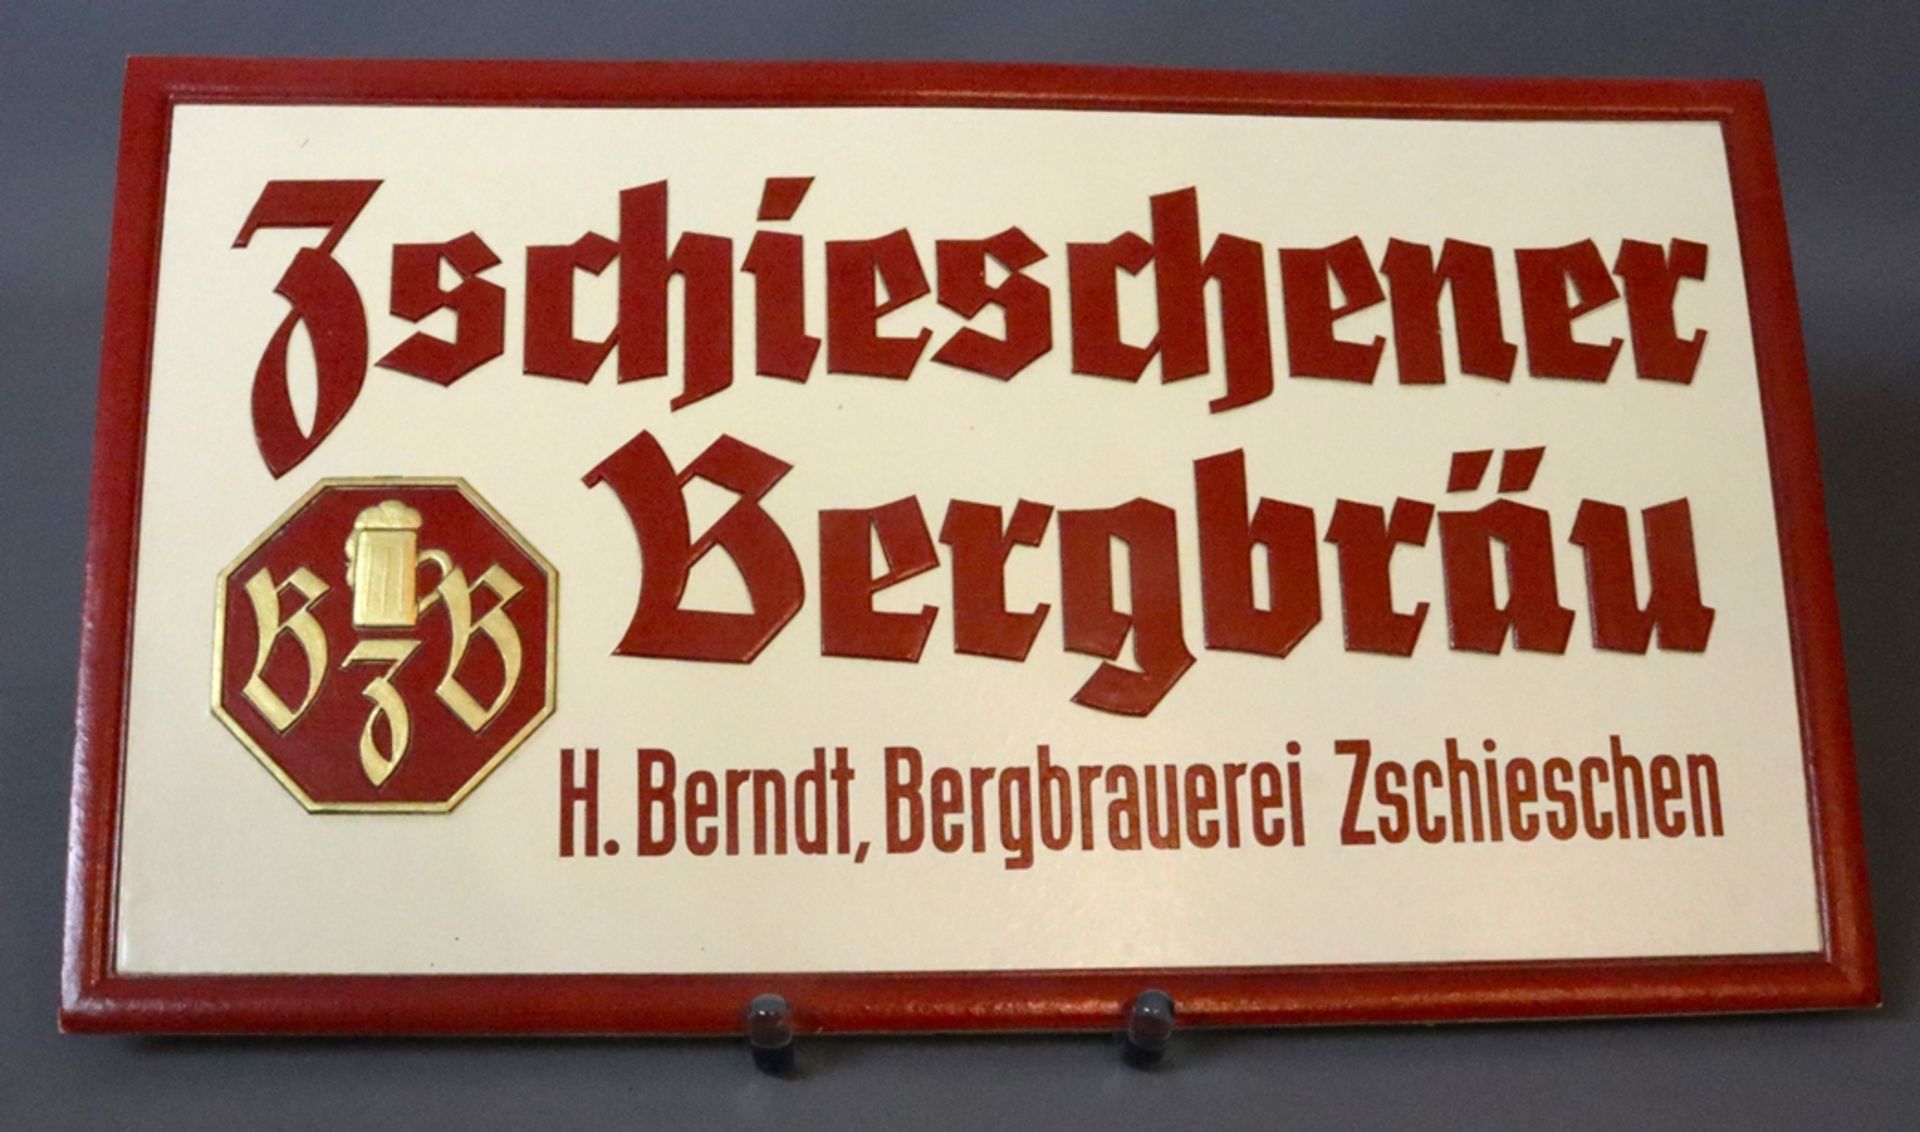 Beer advertisement Saxony, beginning of the 20th century, German Empire